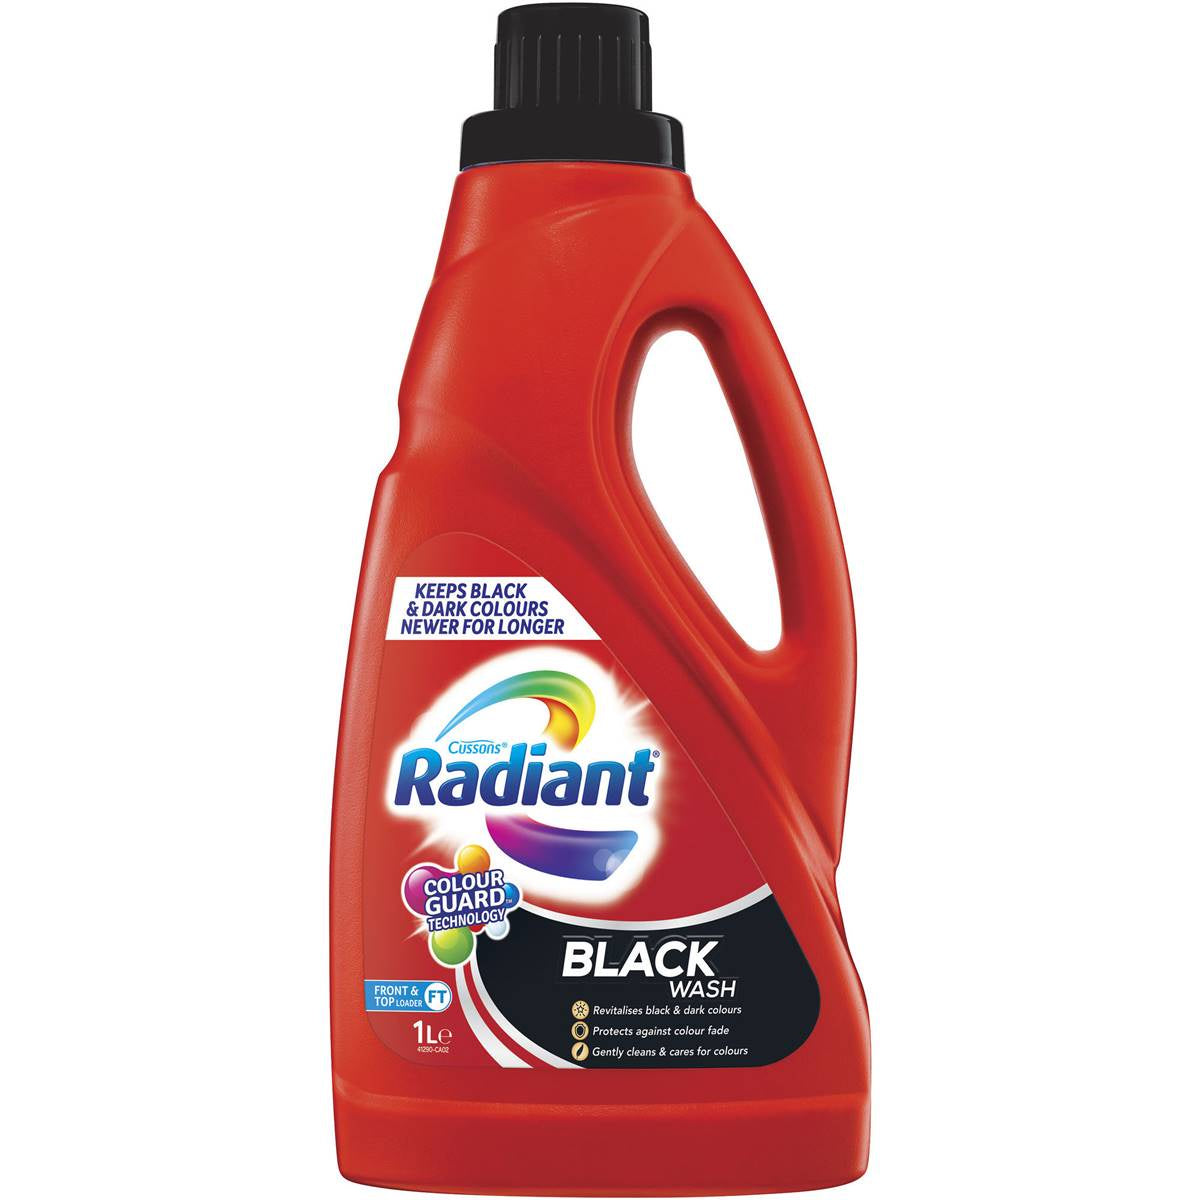 Radiant Blacks & Darks Laundry Liquid Detergent Black Wash 1L